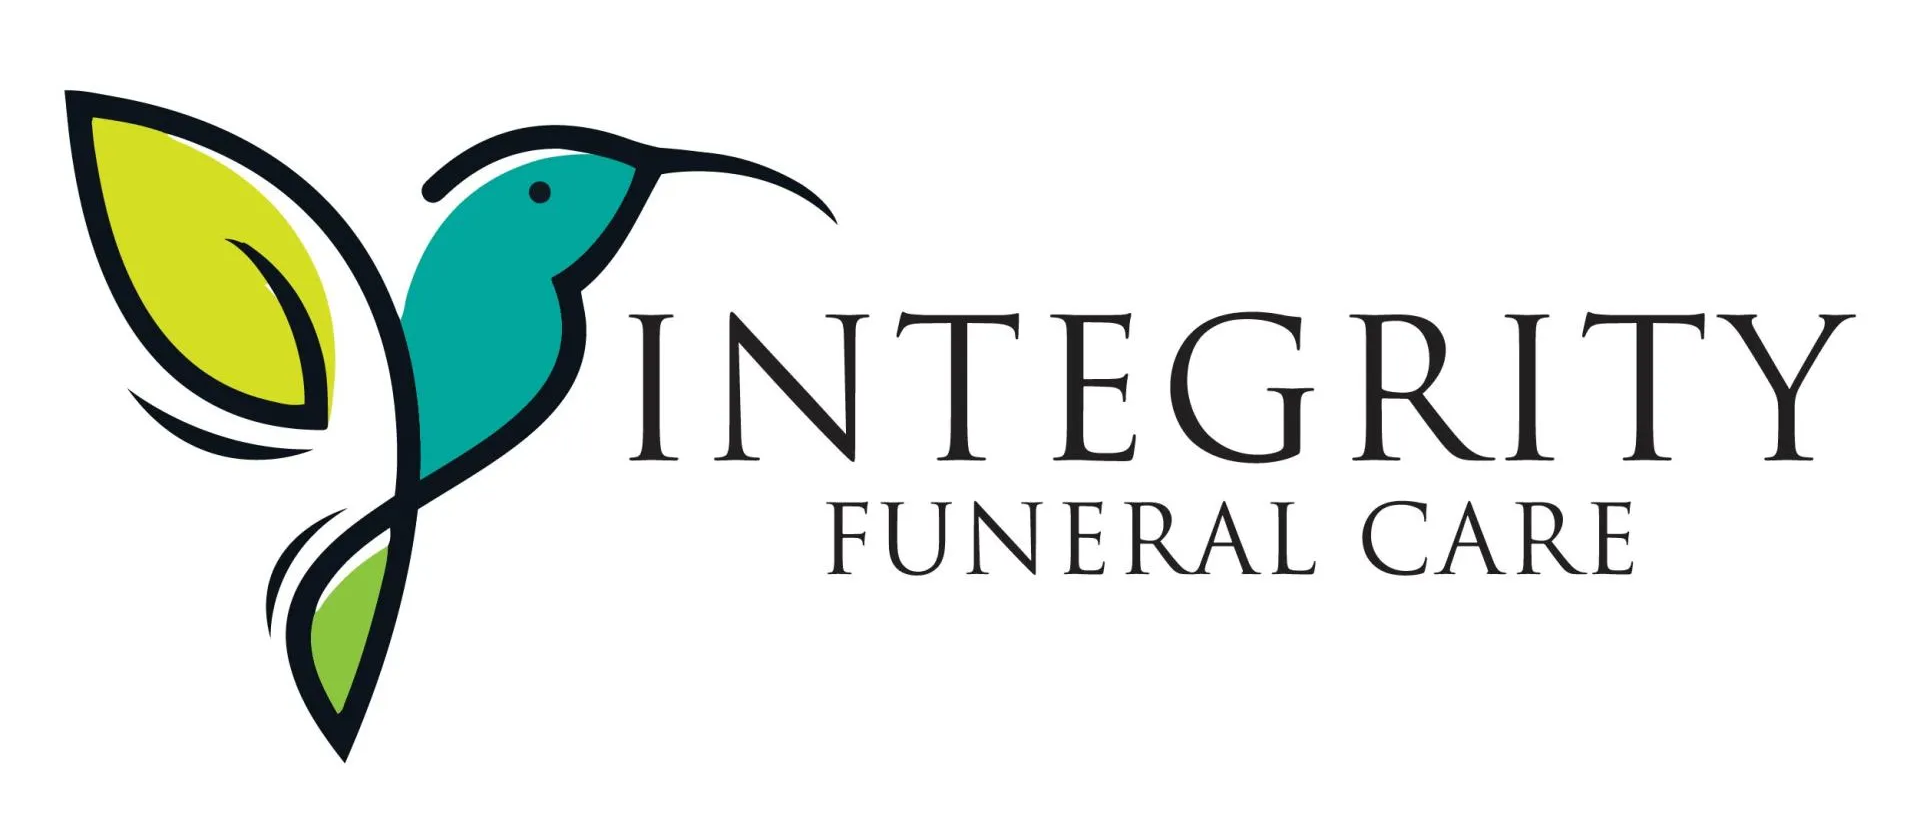 Integrity Funeral Care Company Logo